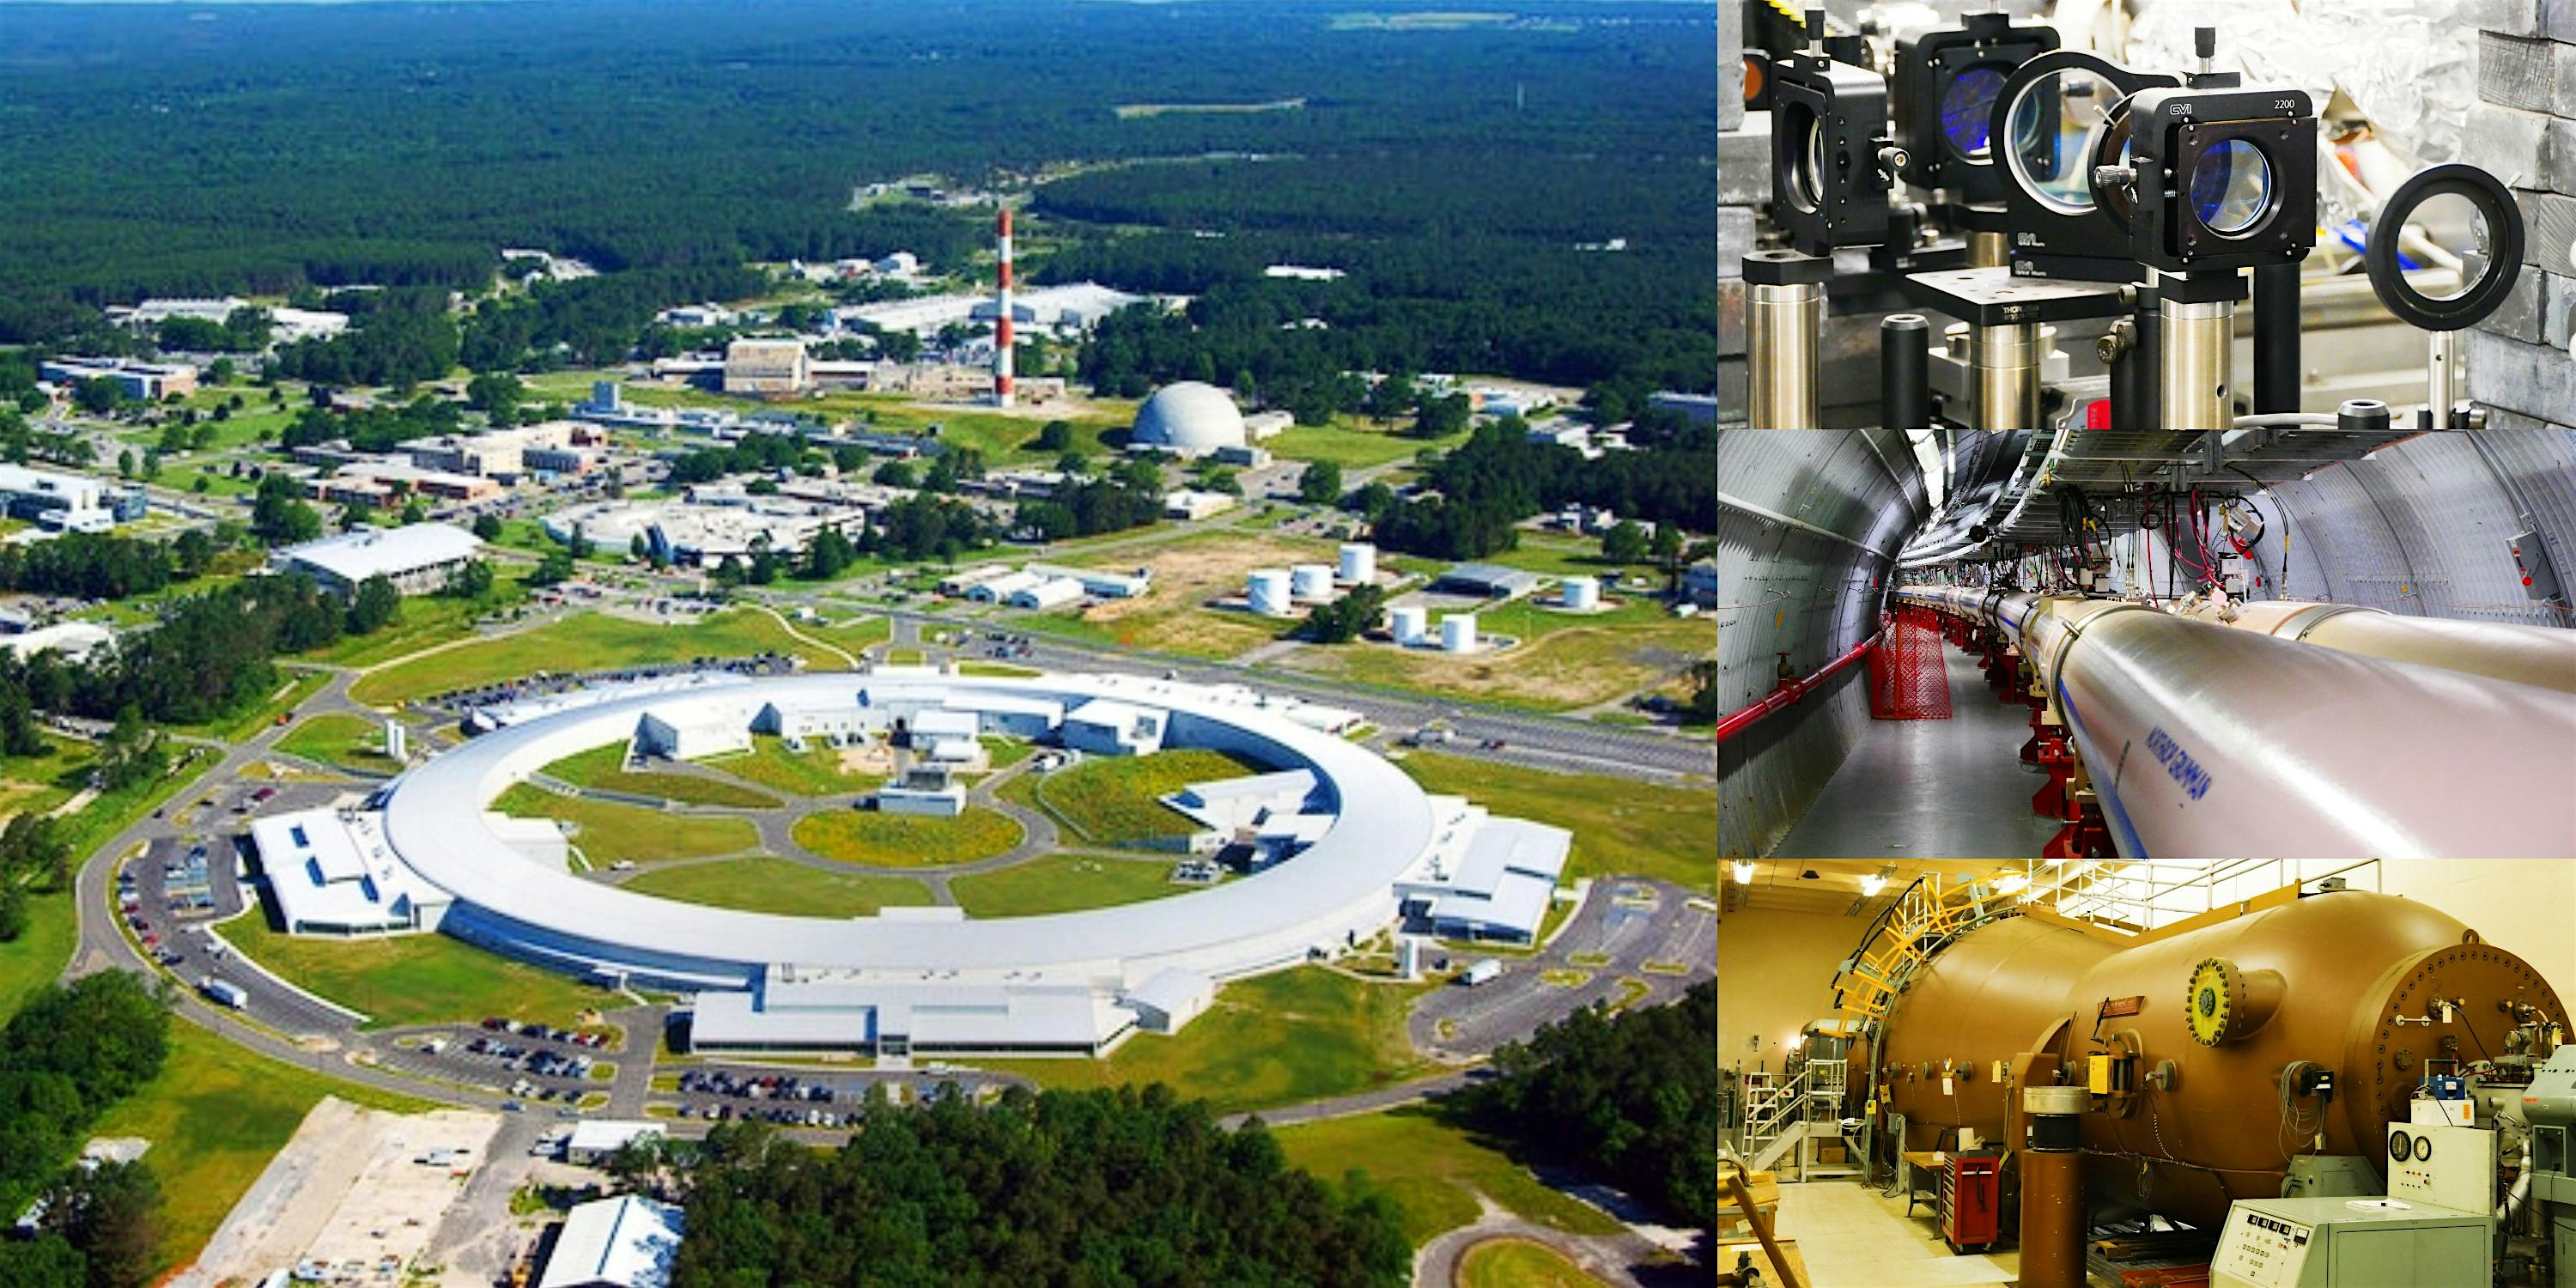 Inside Look @ U.S. Dept. of Energy's Brookhaven National Laboratory